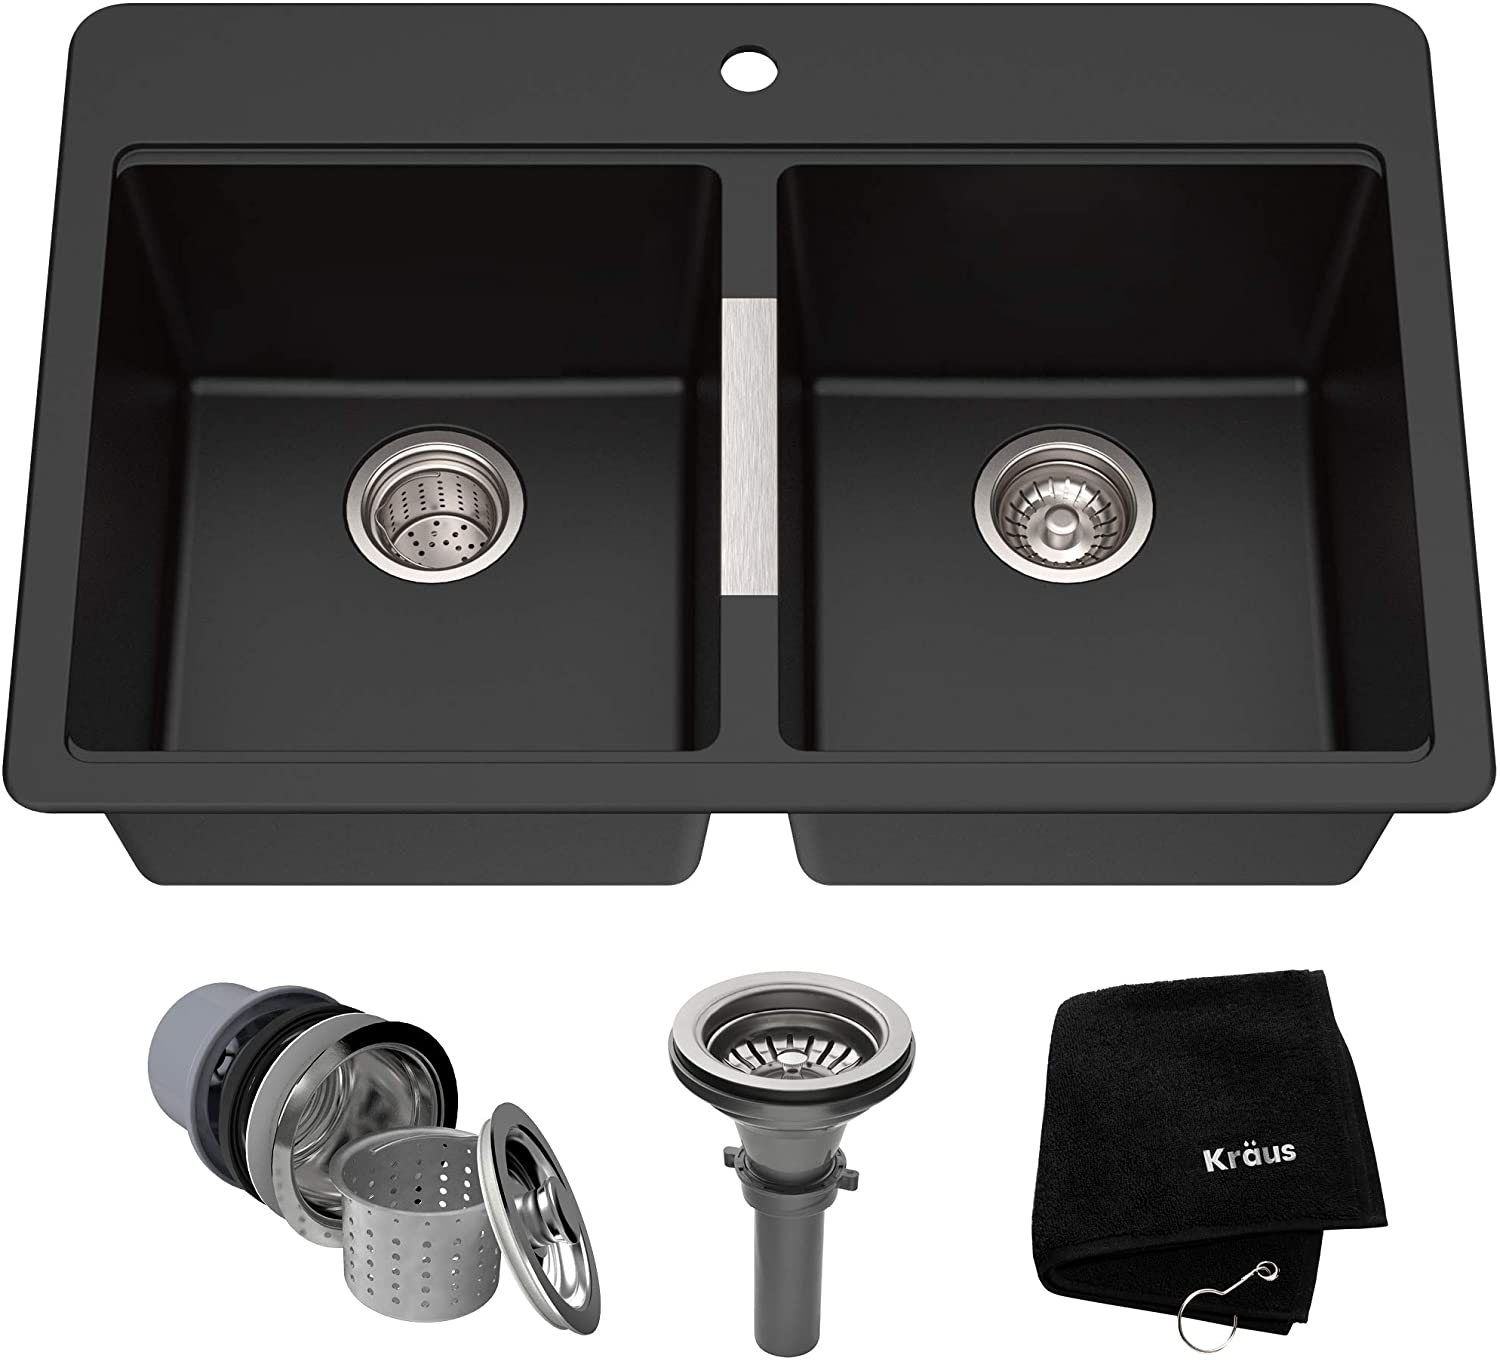 B00E6SP4NU Kraus Quarza Kitchen Sink, 33-Inch Equal Bowls, Black Onyx Granite, KGD-433B model